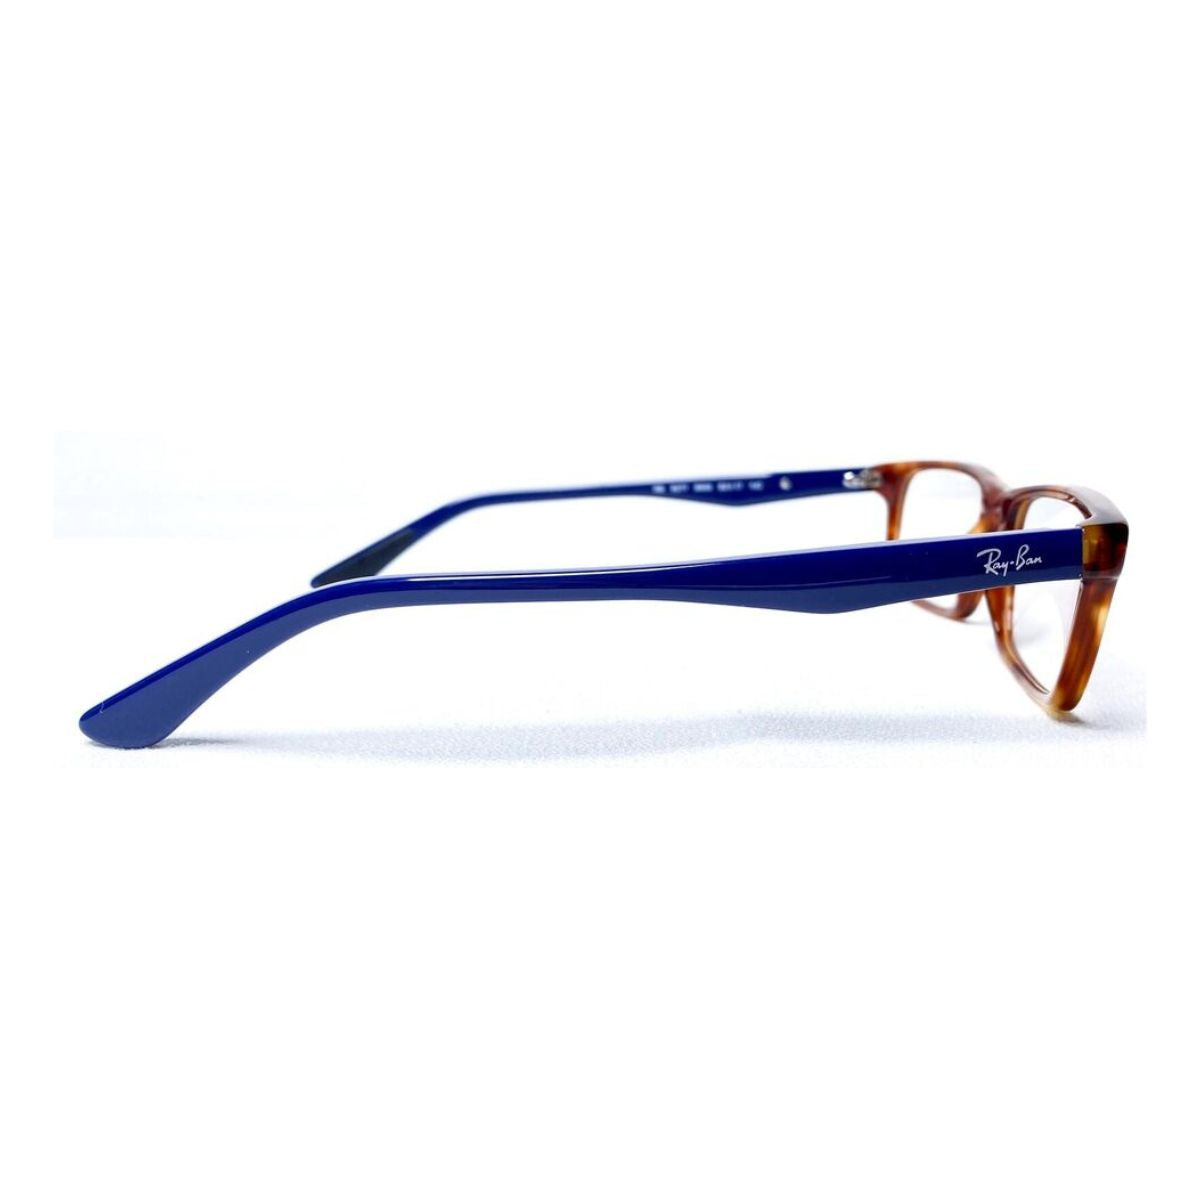 "best Rayban 5277 5609 eyewear glasses frame for men and women at optorium"